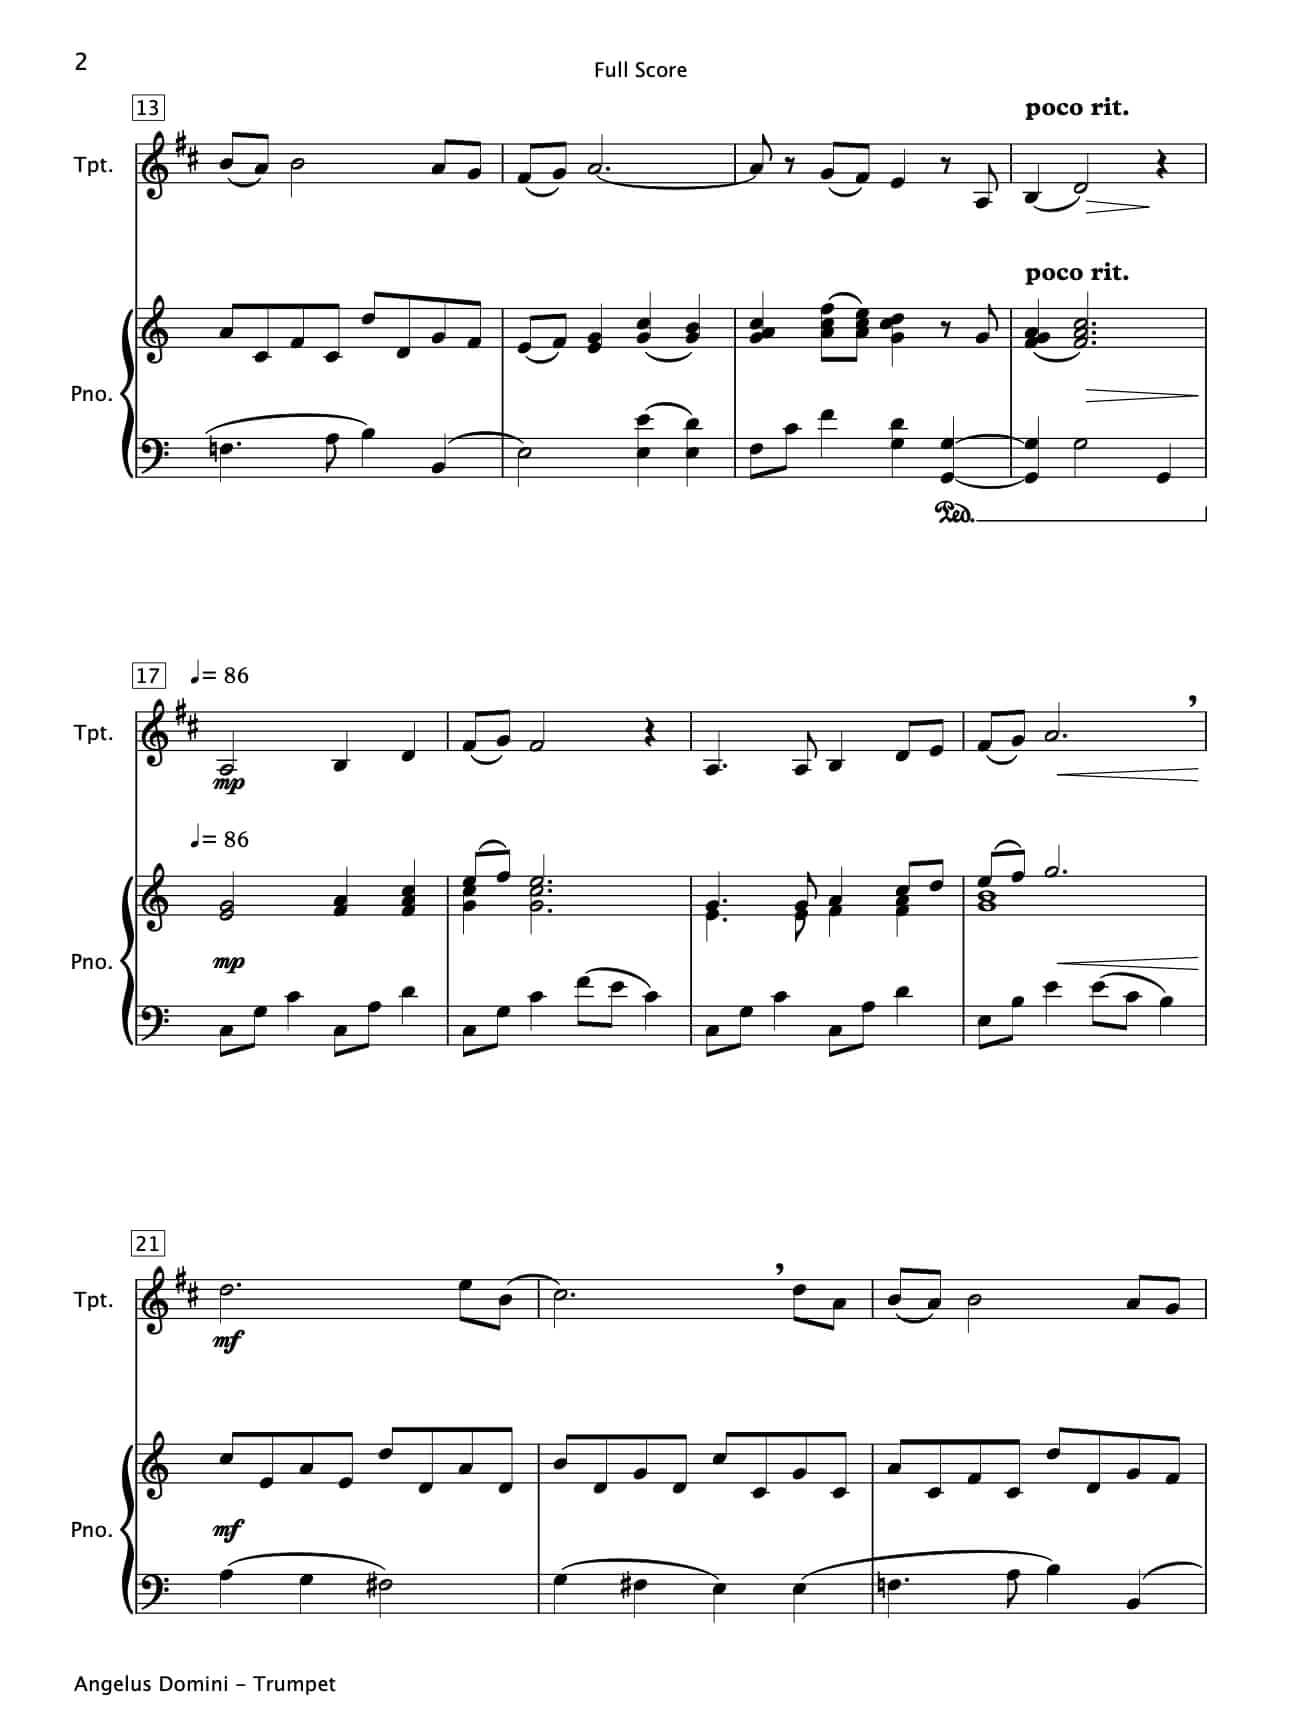 Angelus Domini (Trumpet & Piano)